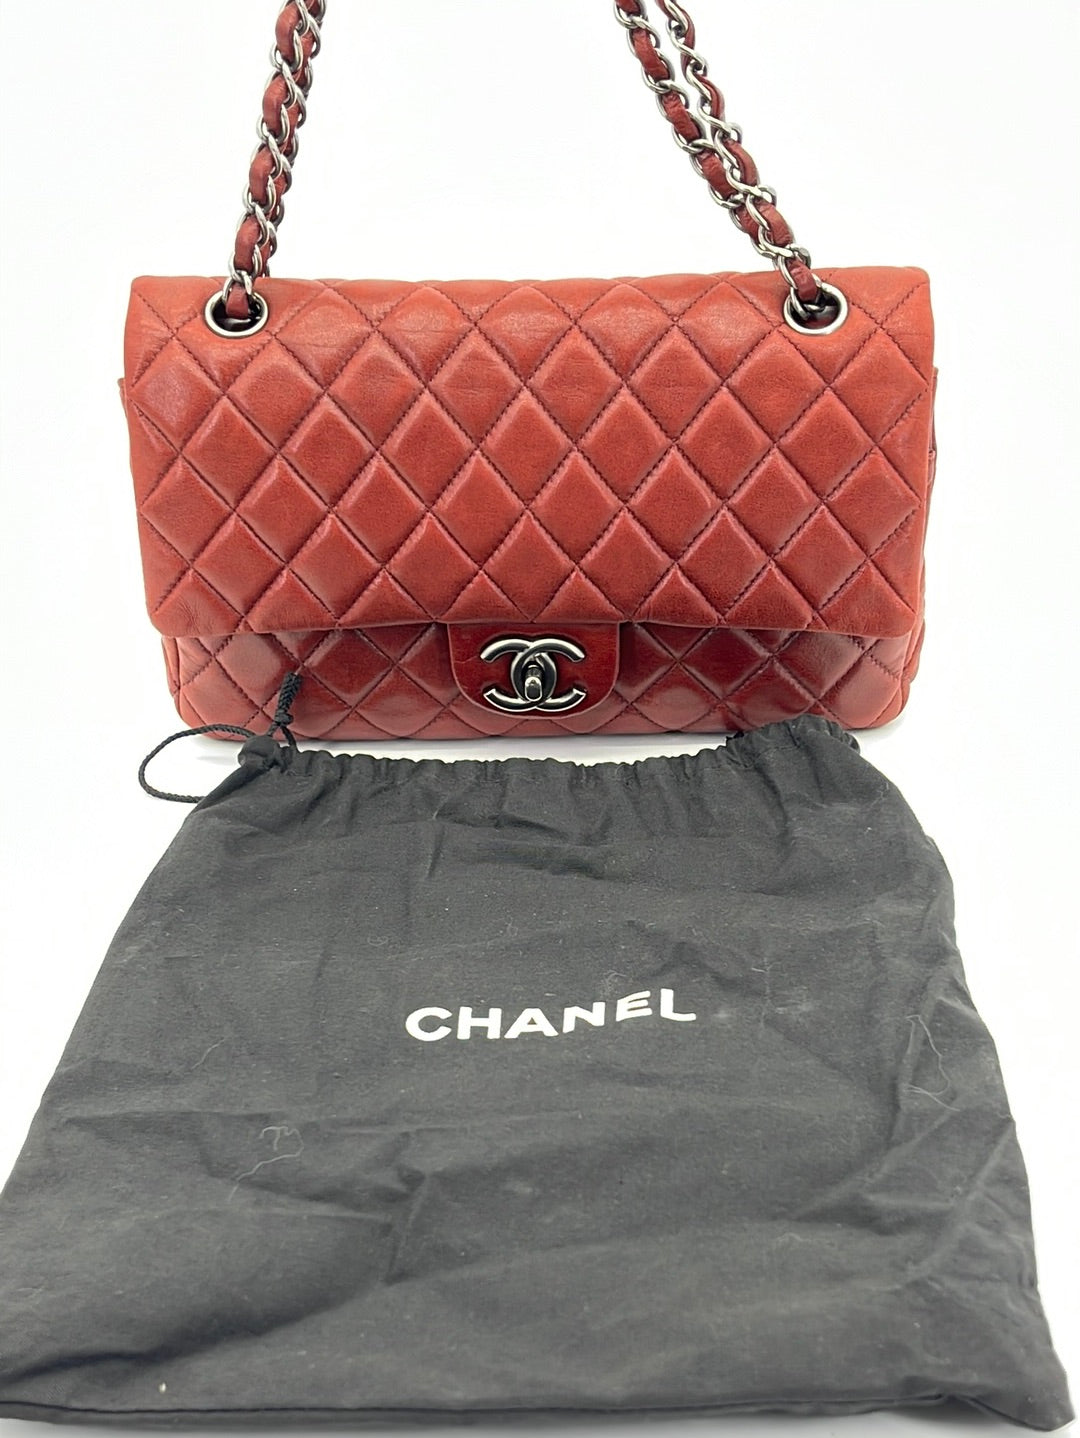 Chanel Classic Medium Lambskin Double Flap Bag, Chanel Handbags